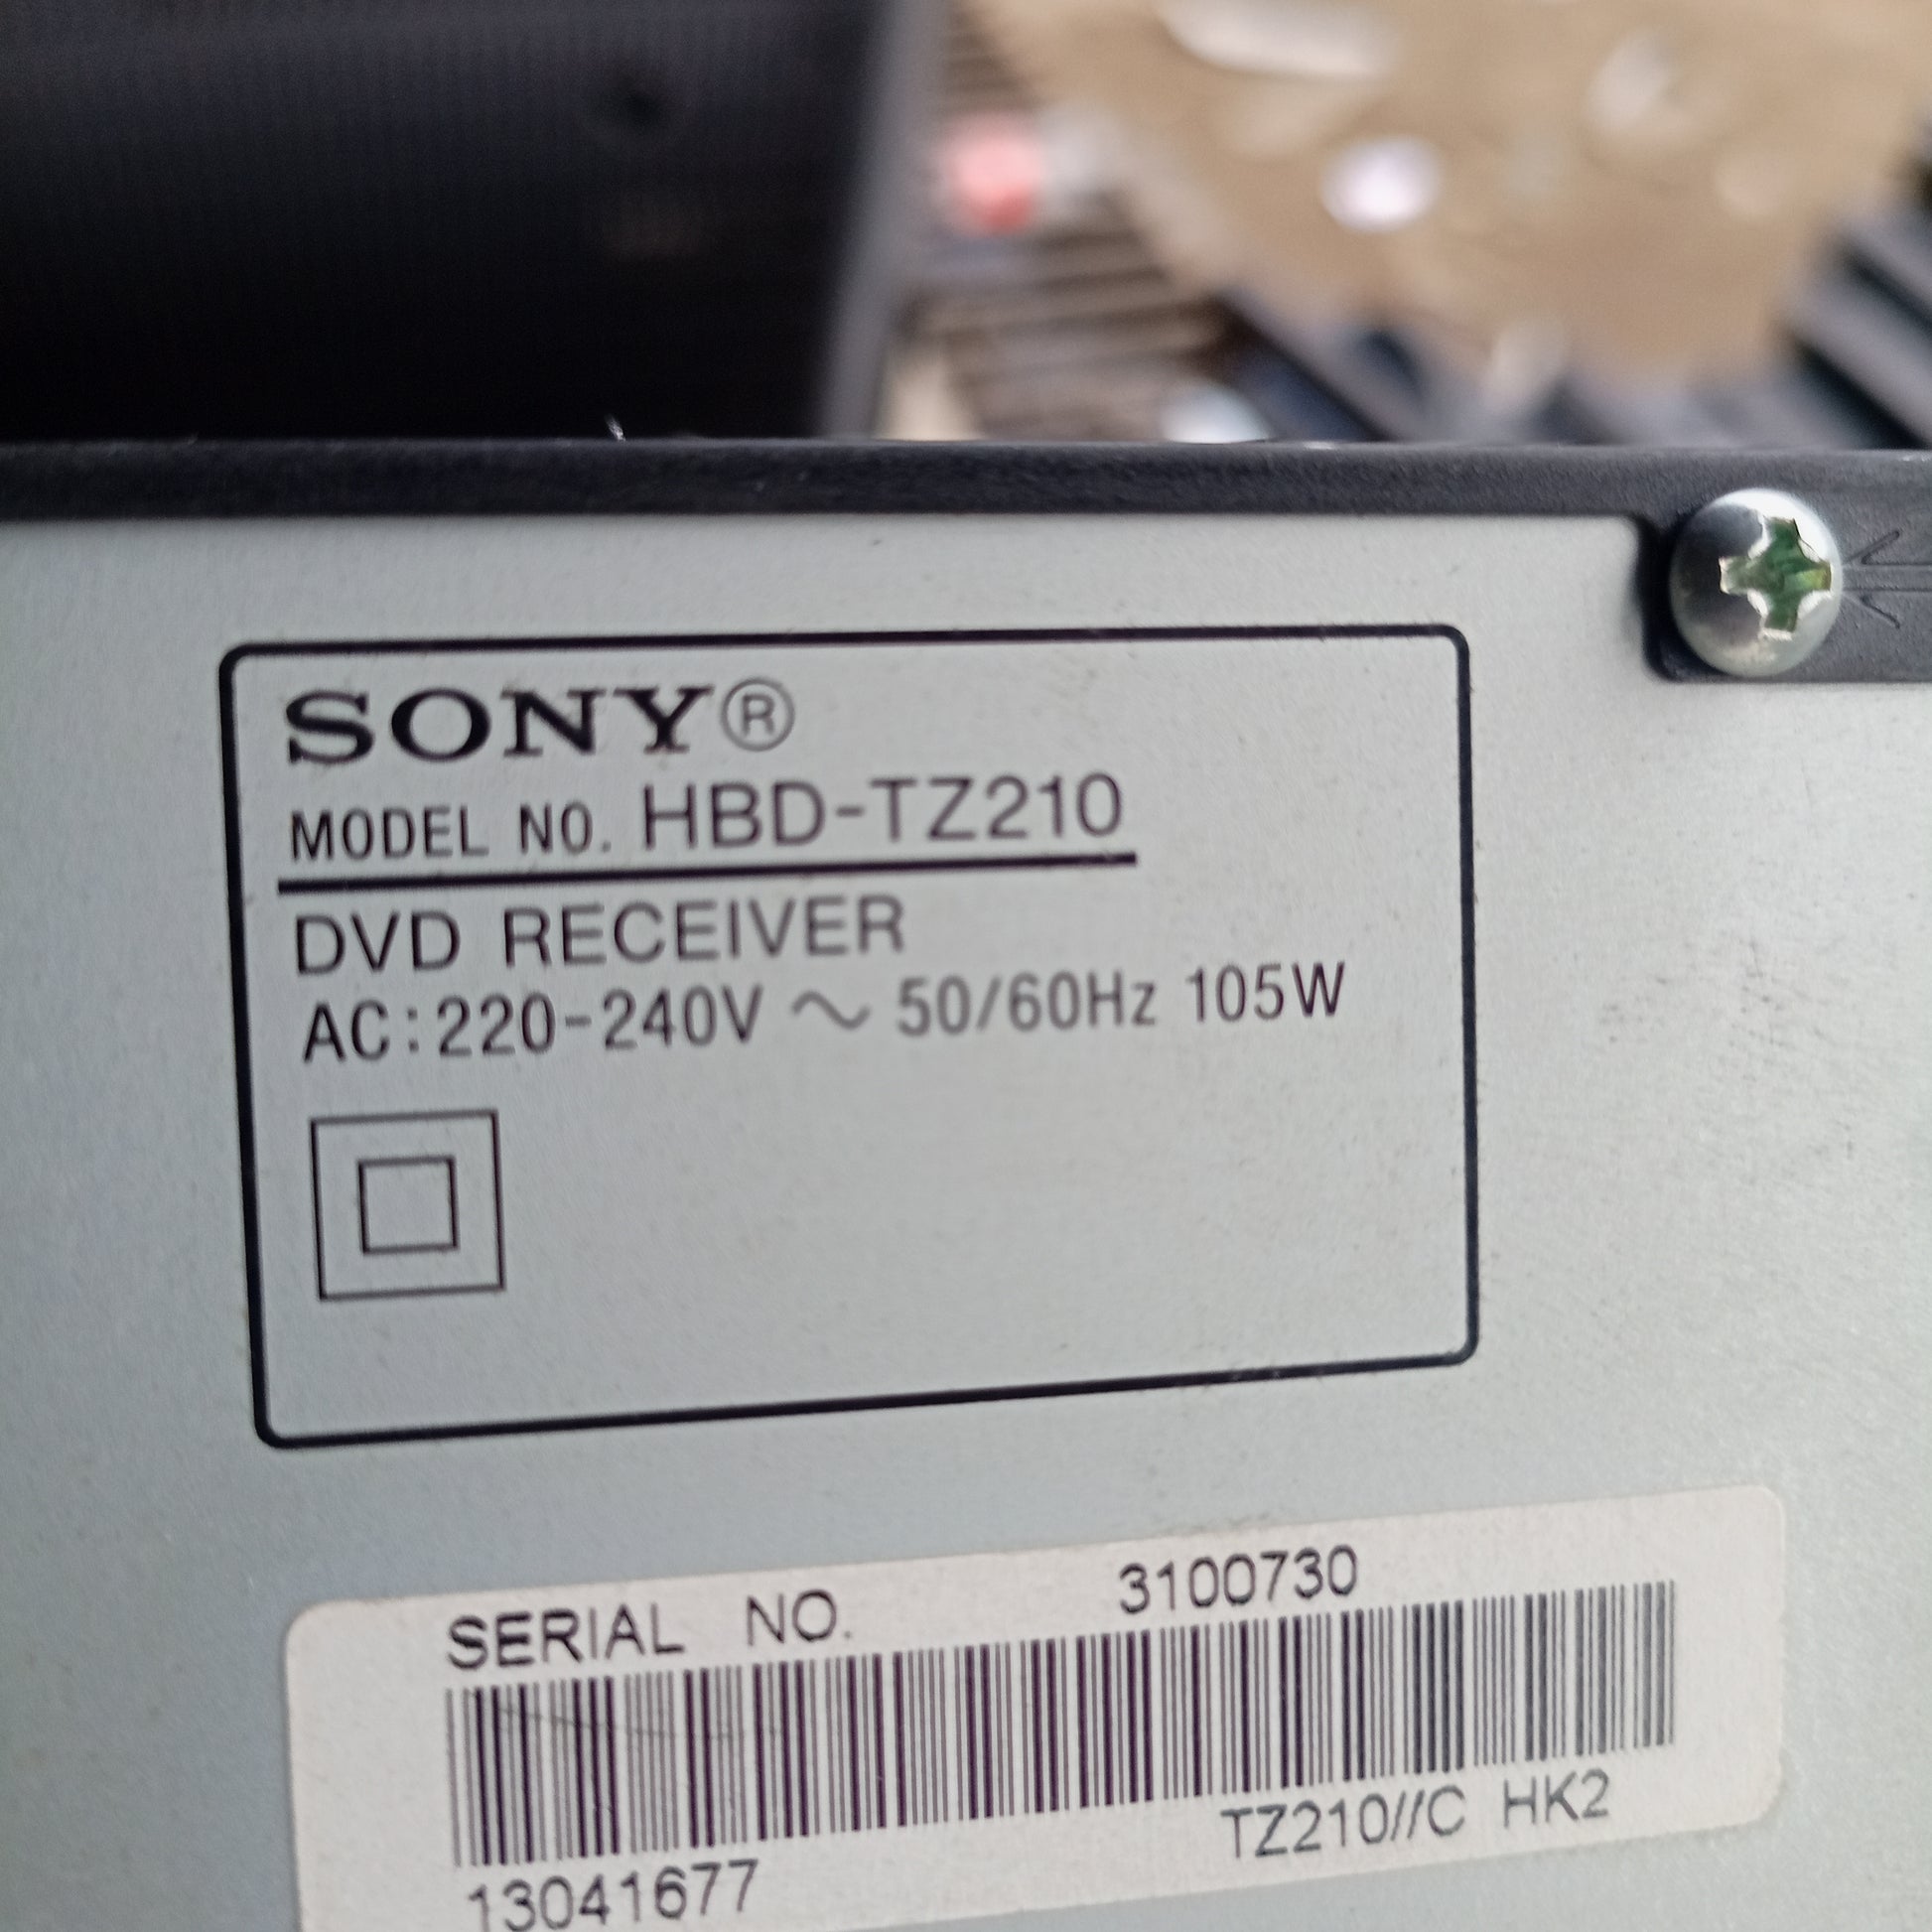 Sony HBD-TZ210 5.1Ch 600 Watts DVD Home Theater Machine Head - Model number sticker